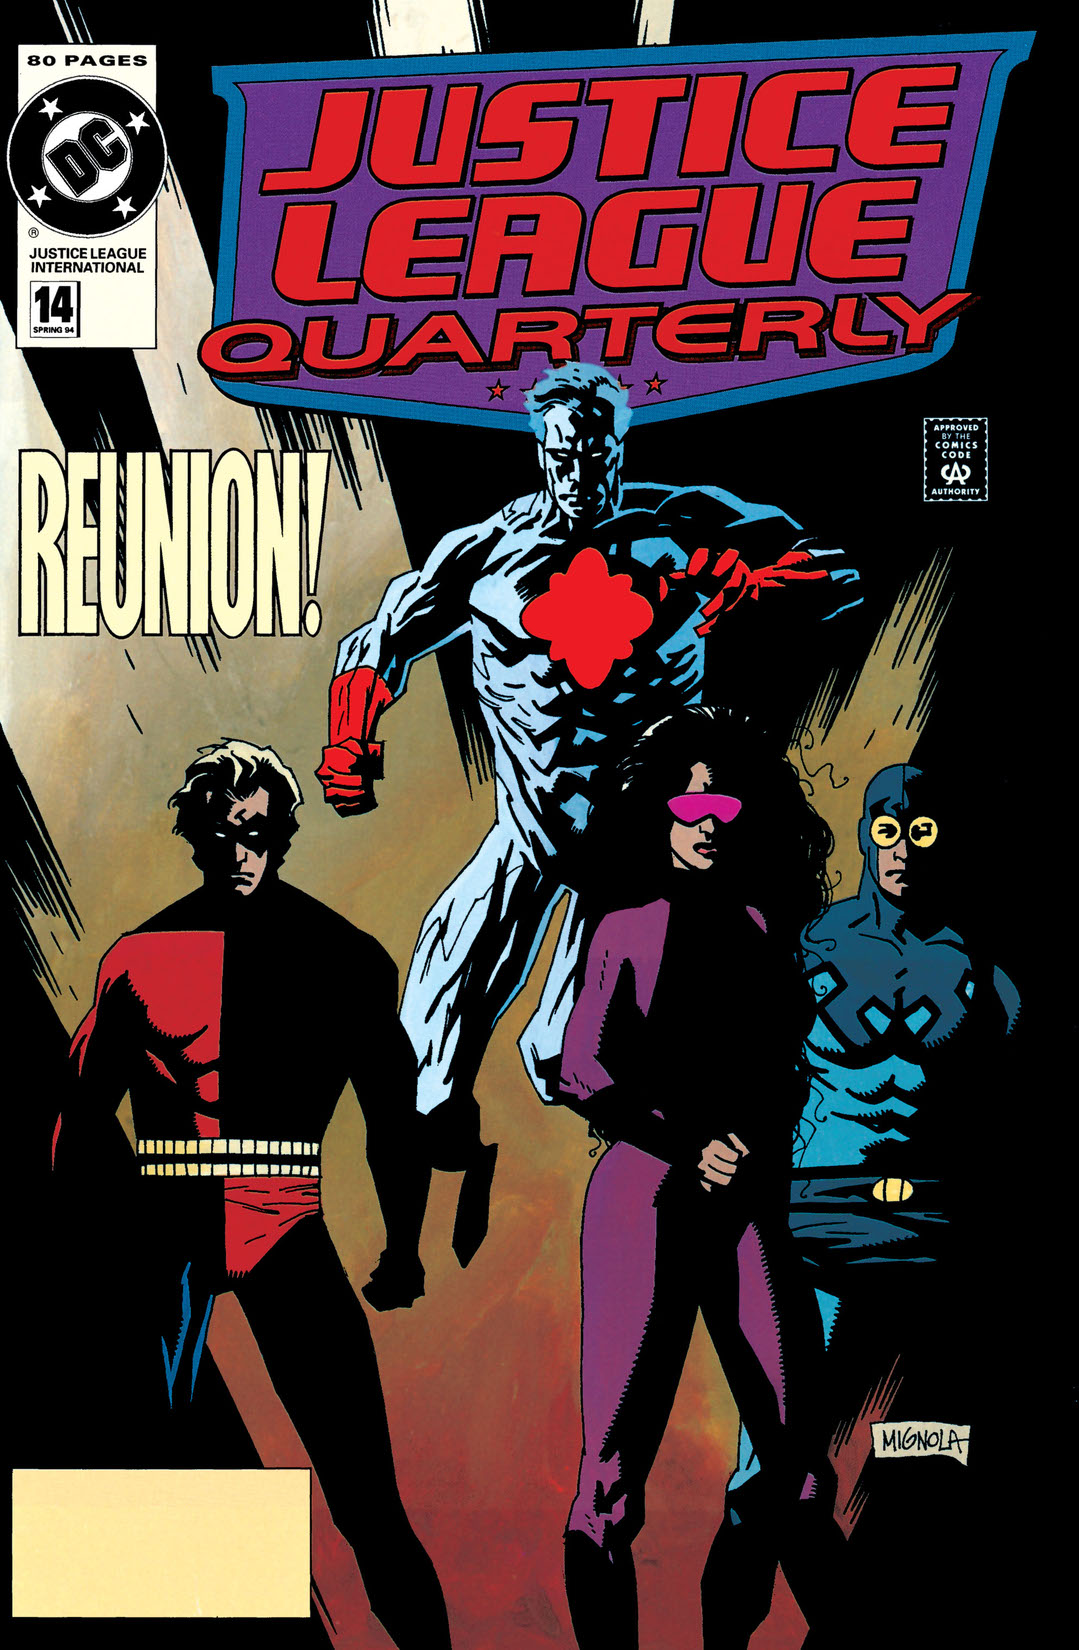 Justice League Quarterly #14 preview images